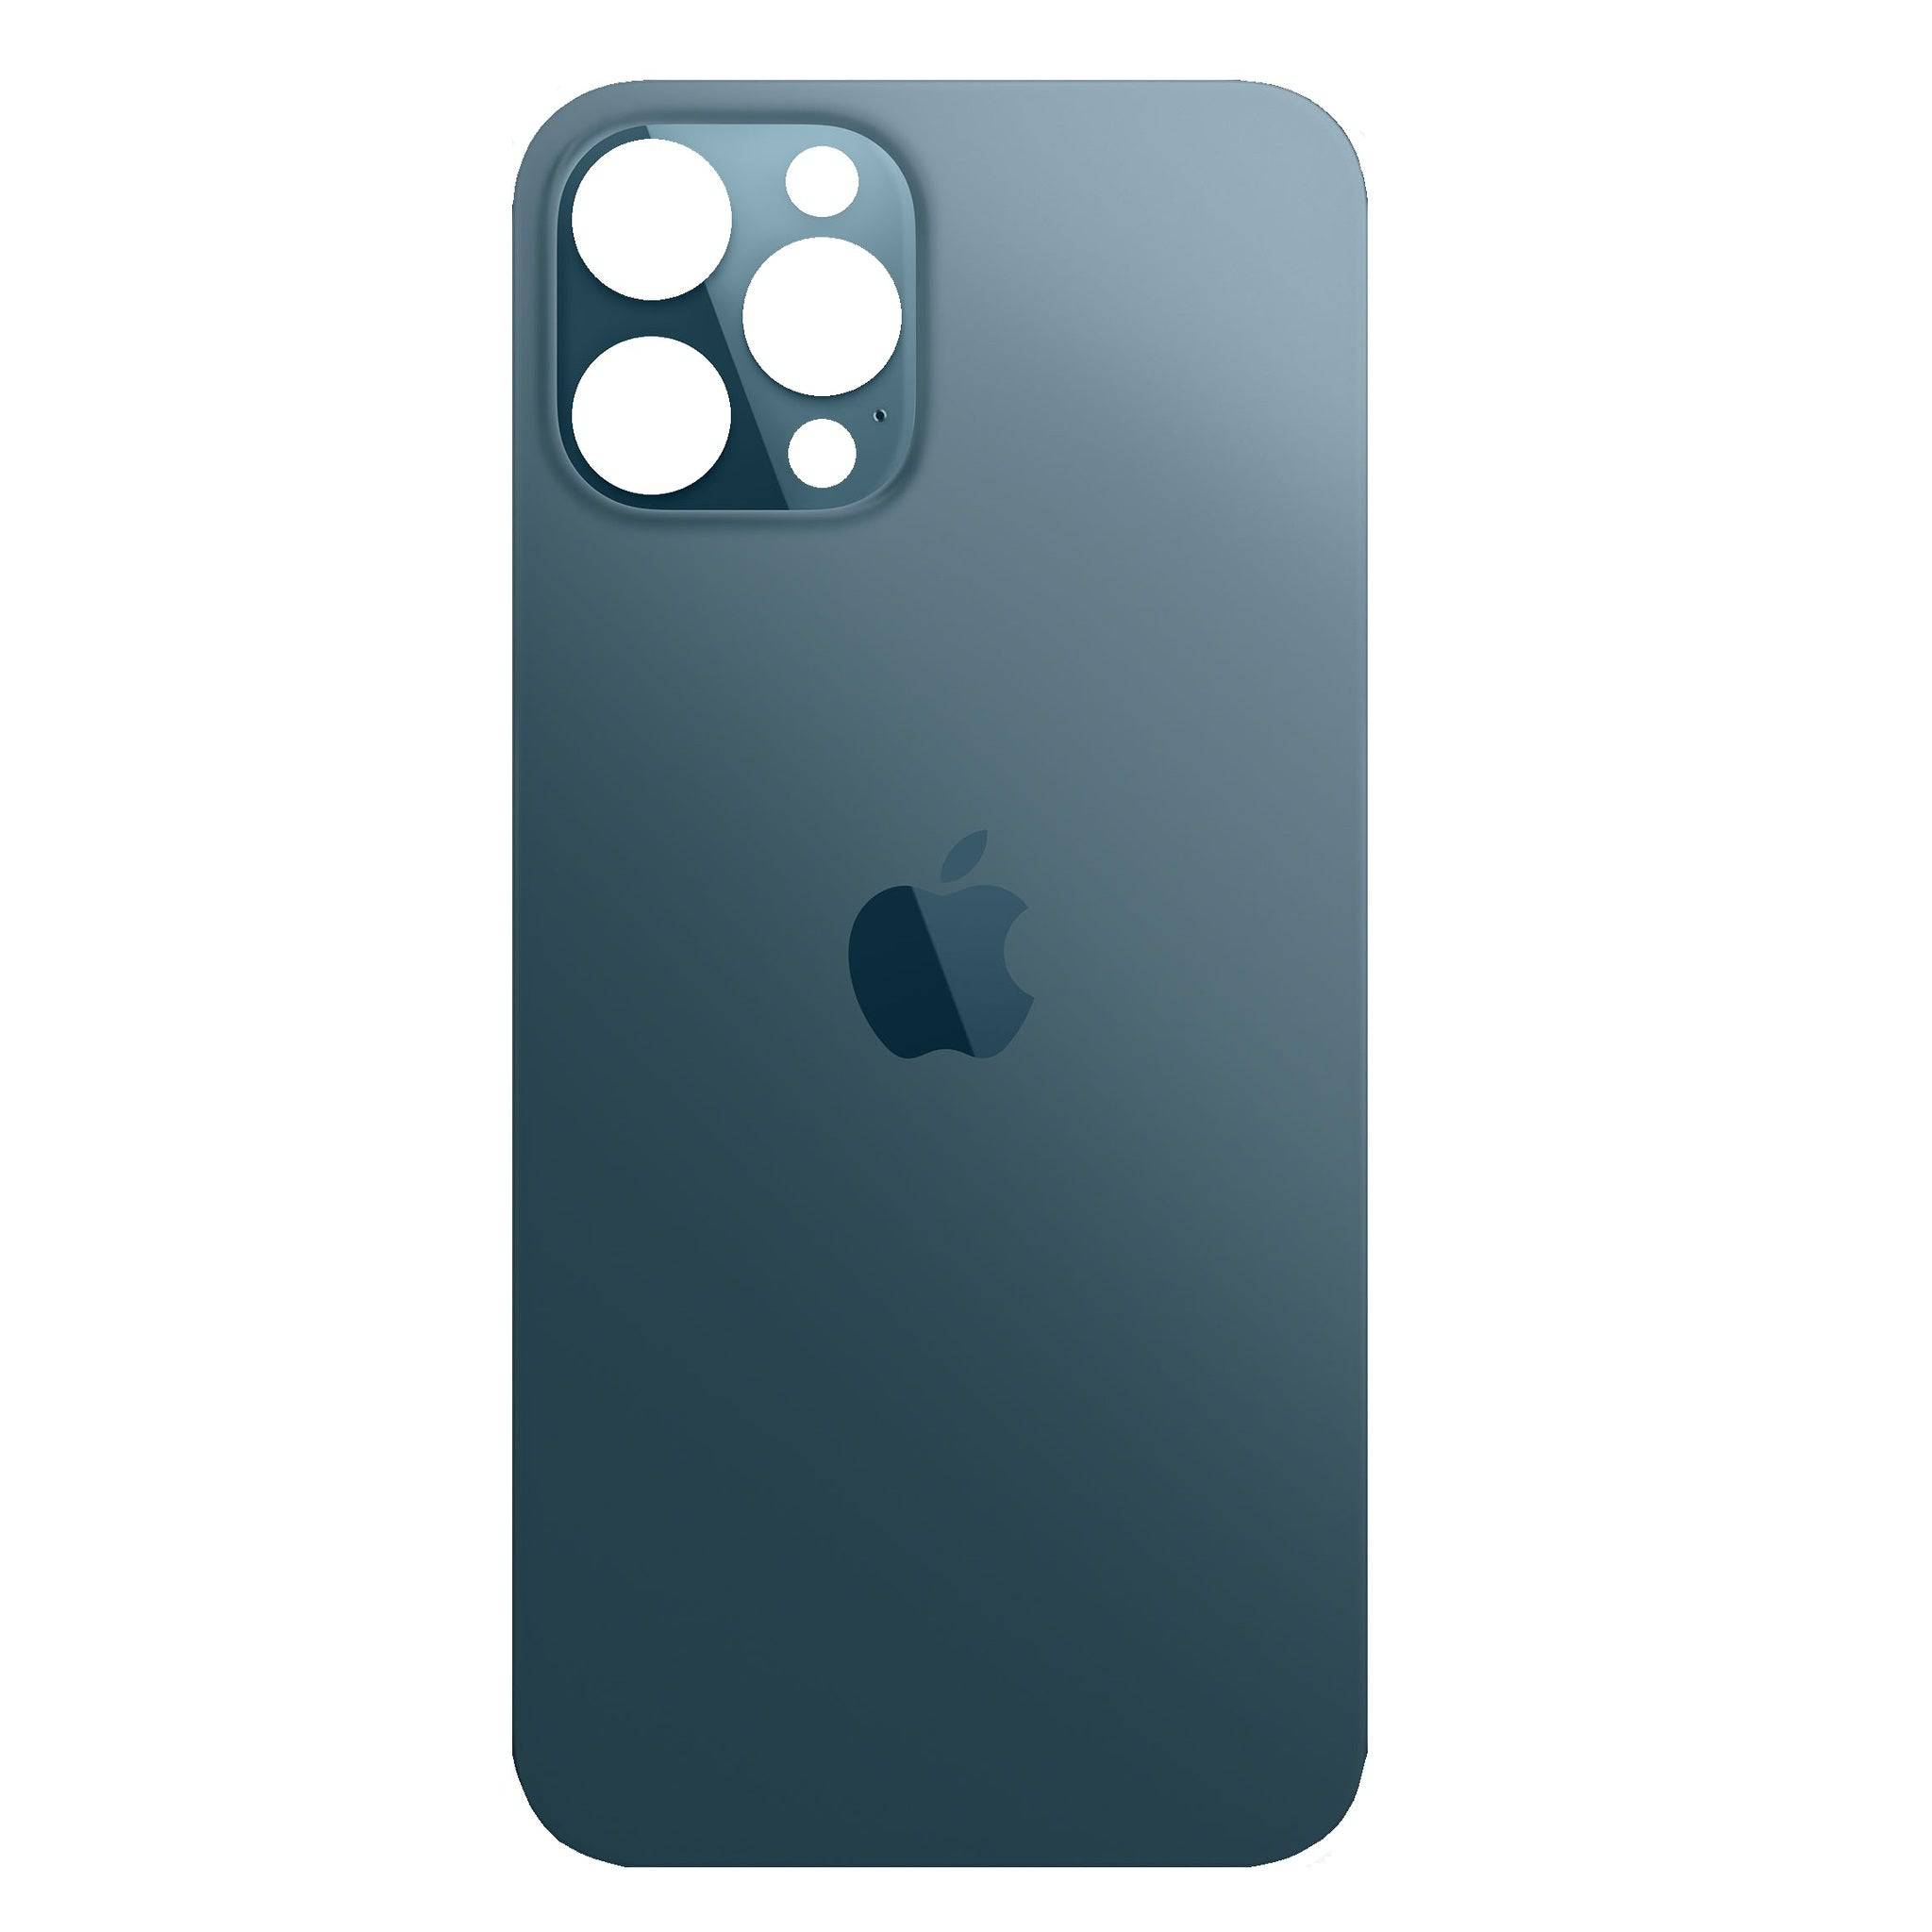 iPhone Back Rear Glass-Apple iPhone 12 Pro Max Back Rear Glass (Big Camera Hole)